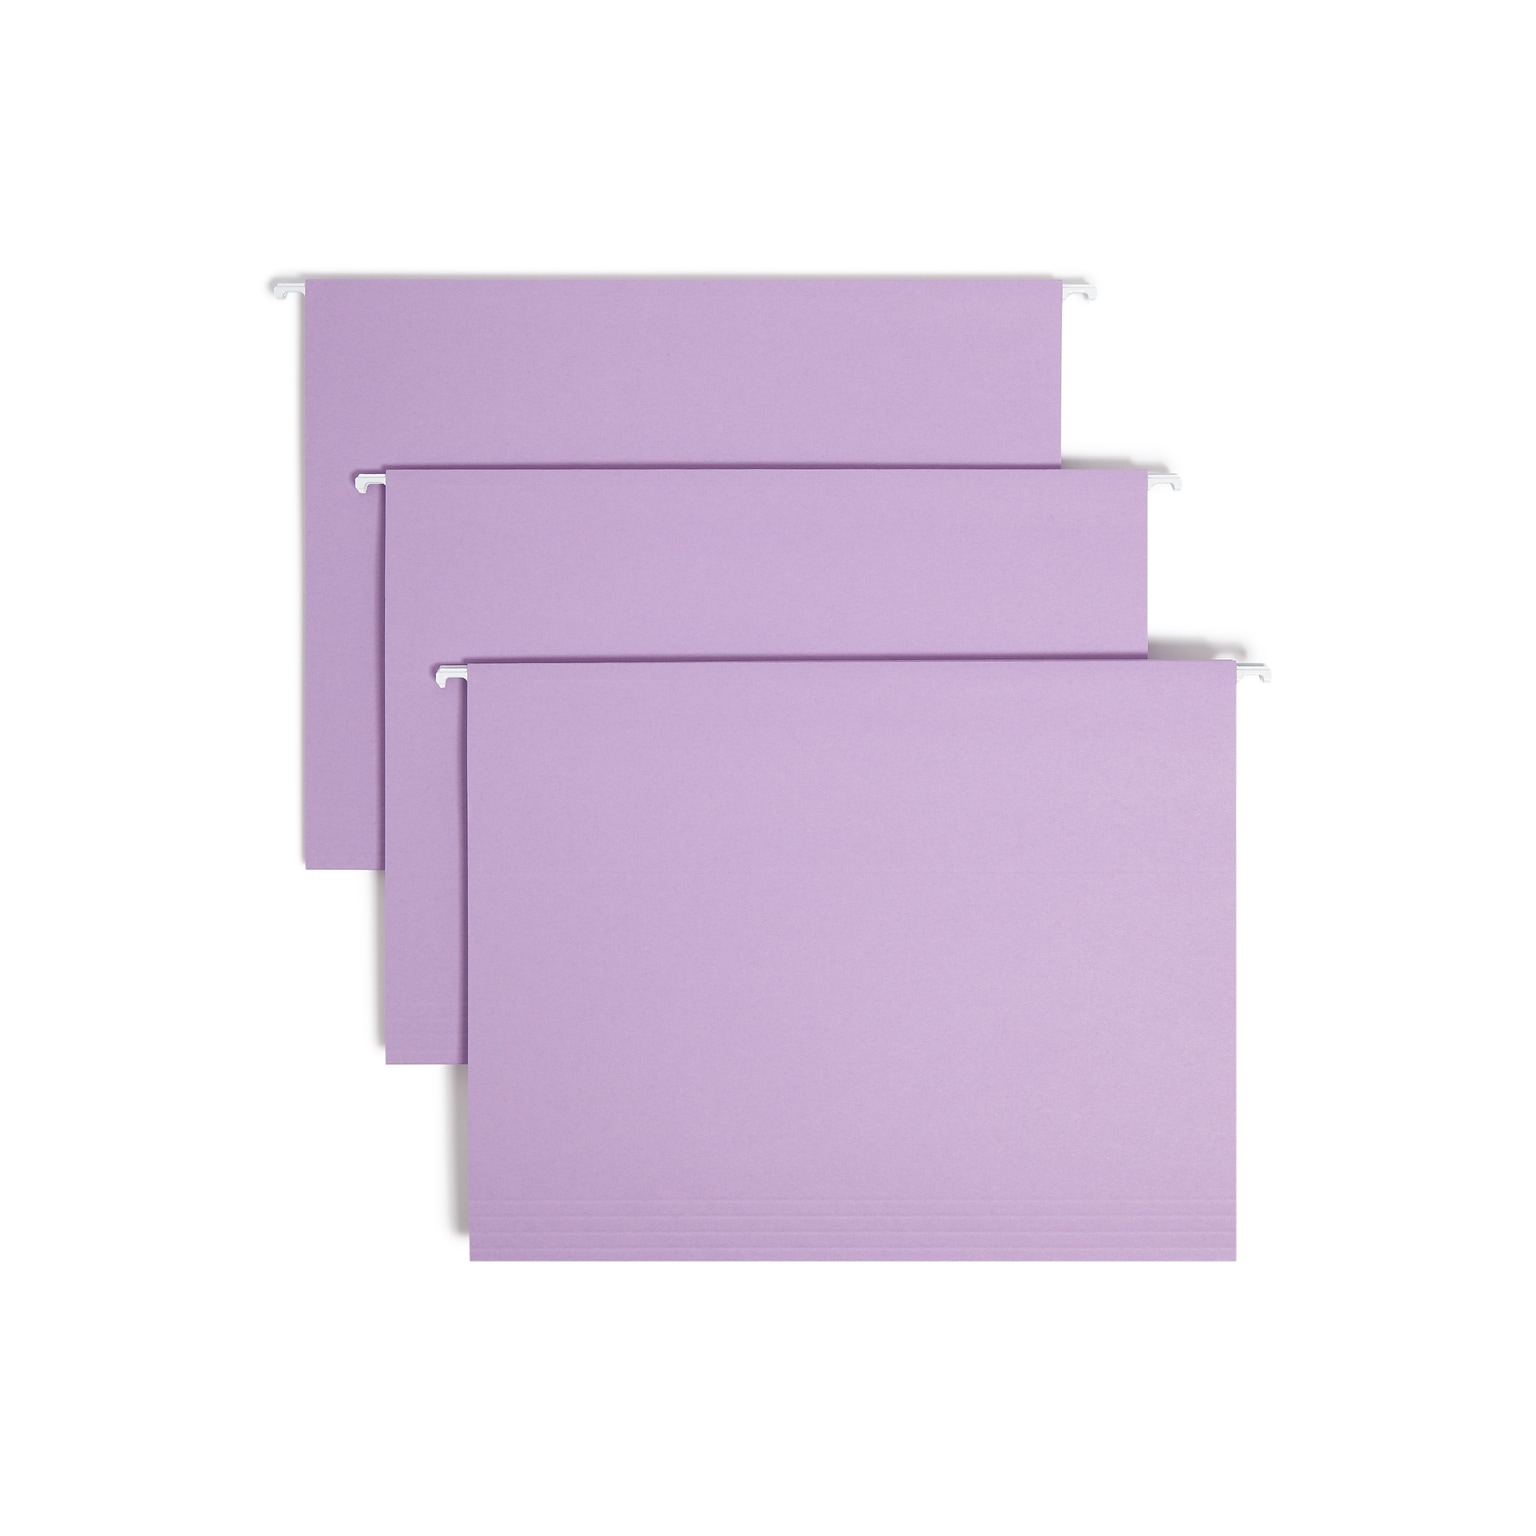 Smead Adjustable Tab Recycled Hanging File Folder, 5-Tab, Letter Size, Lavender, 25/Box (64064)